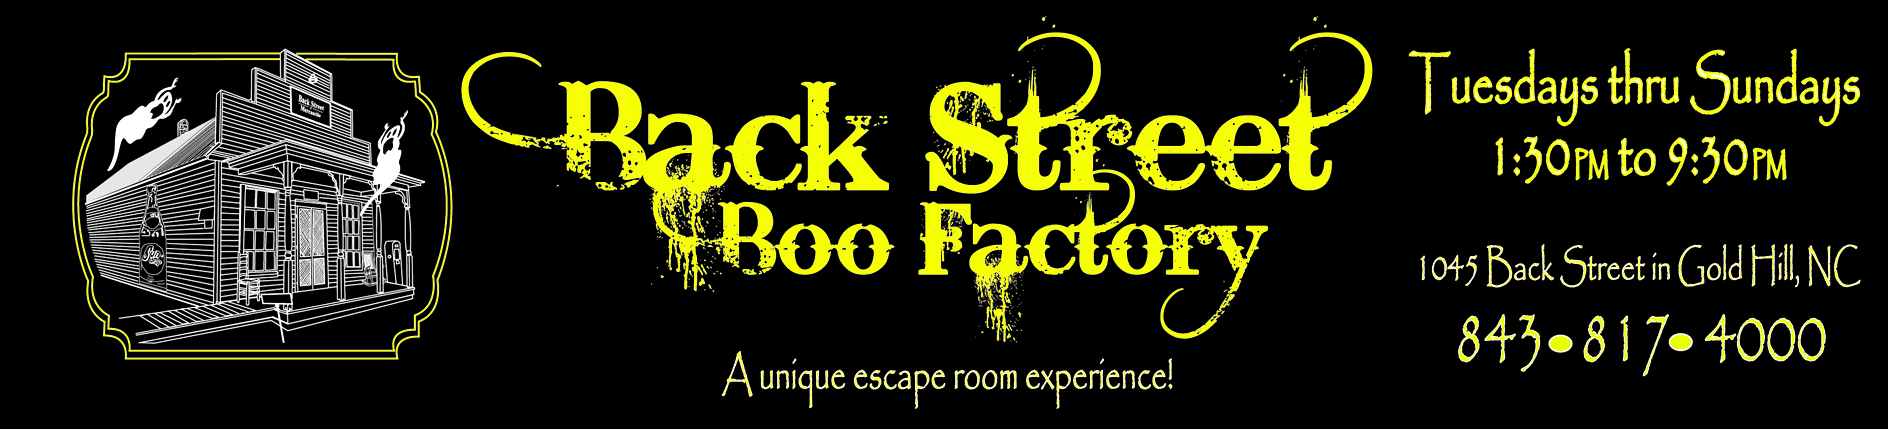 Back Street Boo Factory